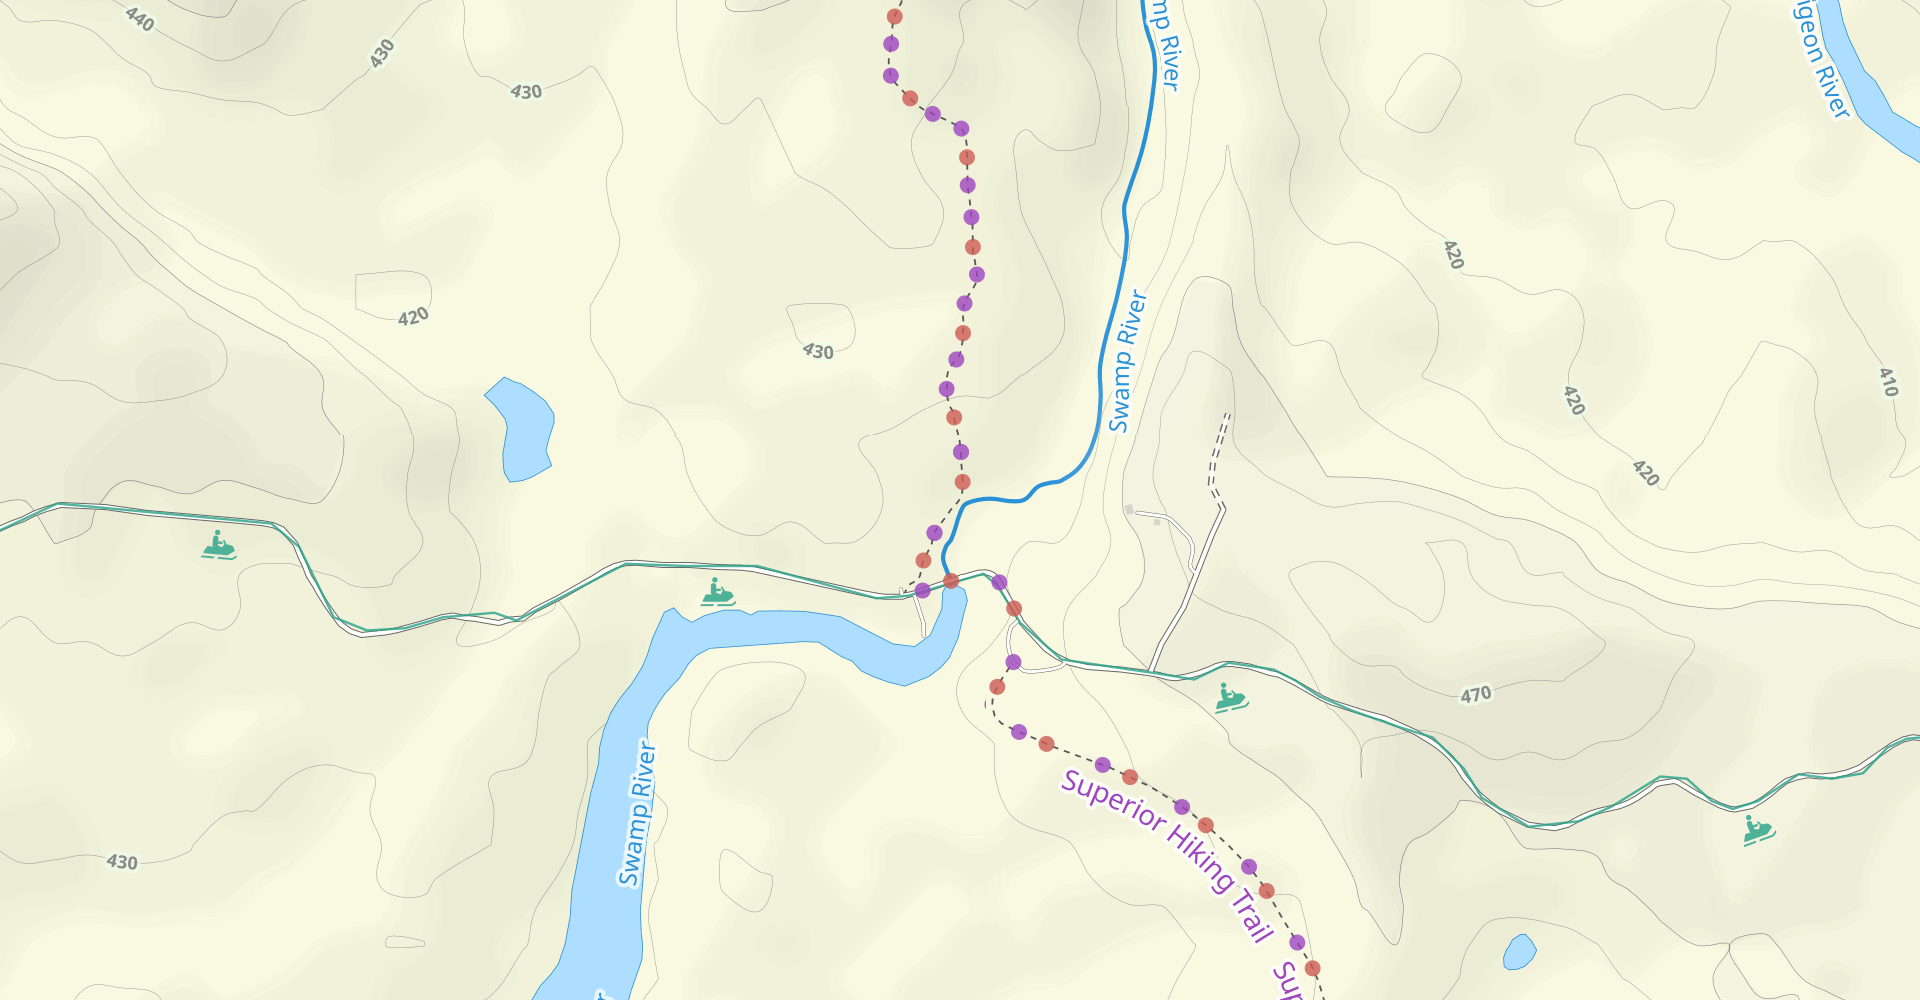 Border Route Trail